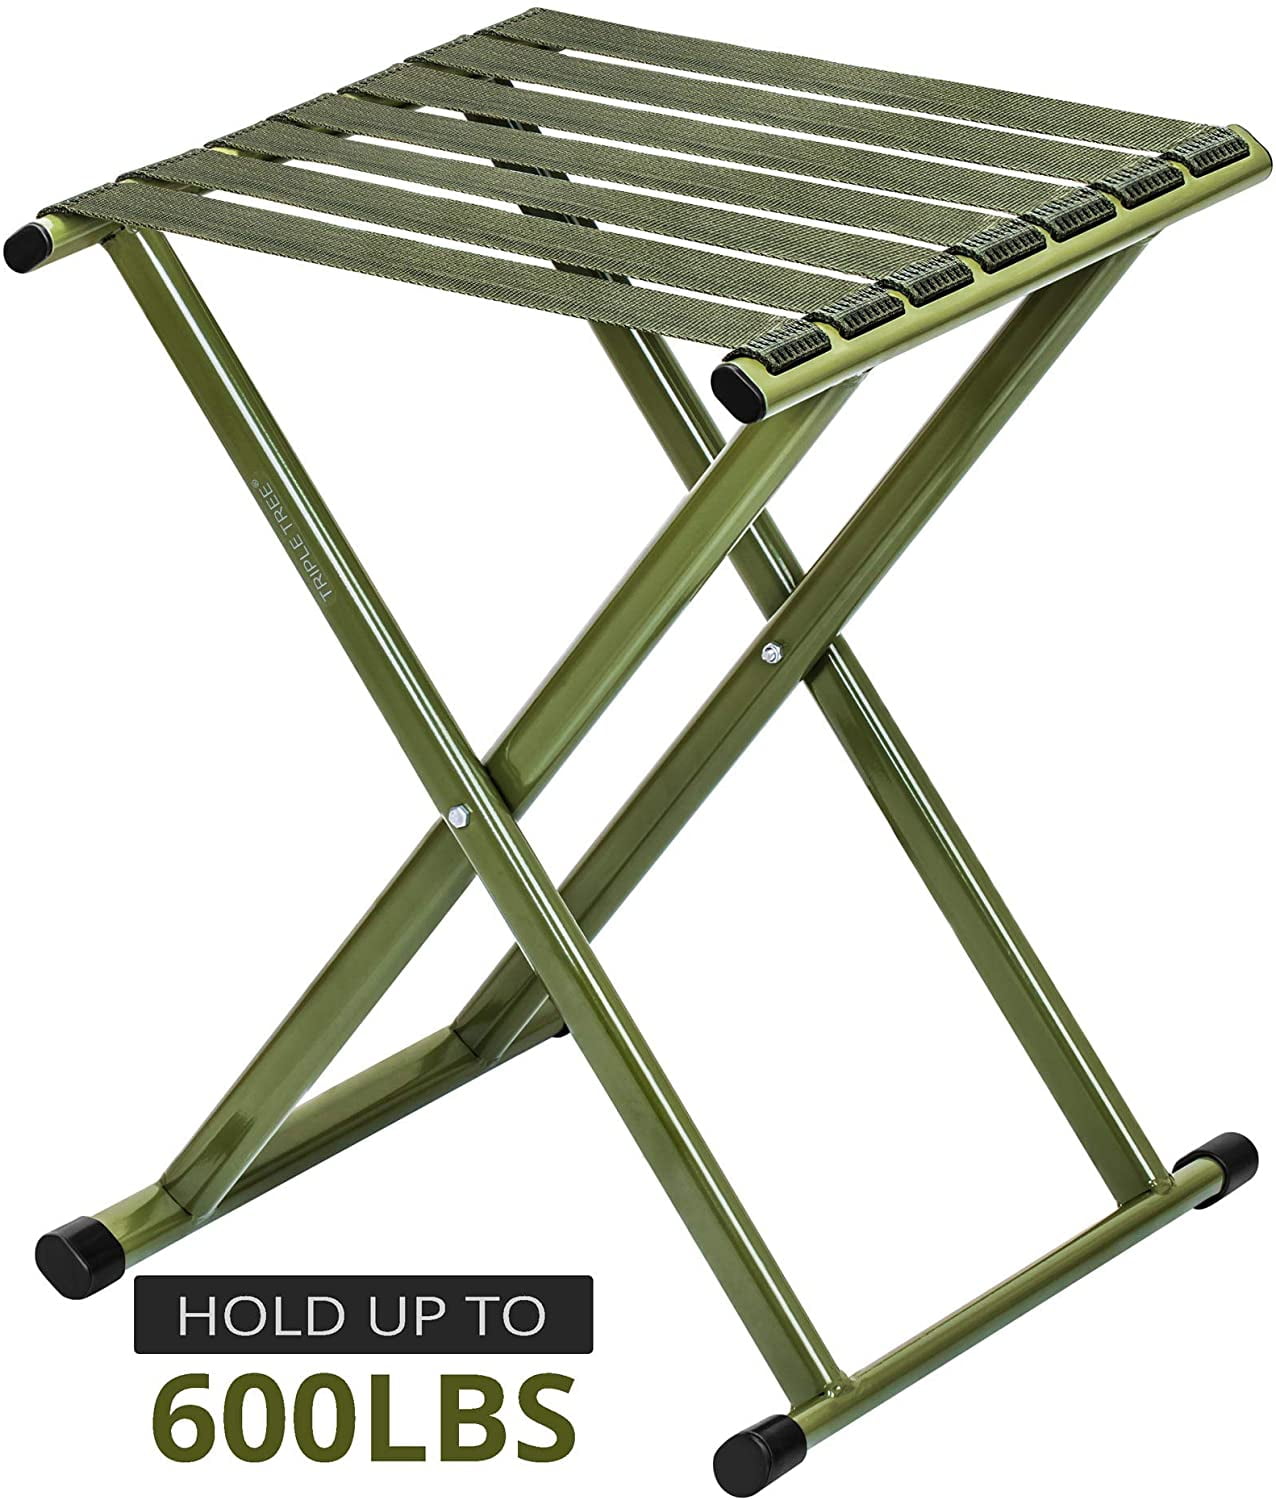 Idepet Folding Portable Camping Stool Lightweight Frame Stool Chair Outdoor 